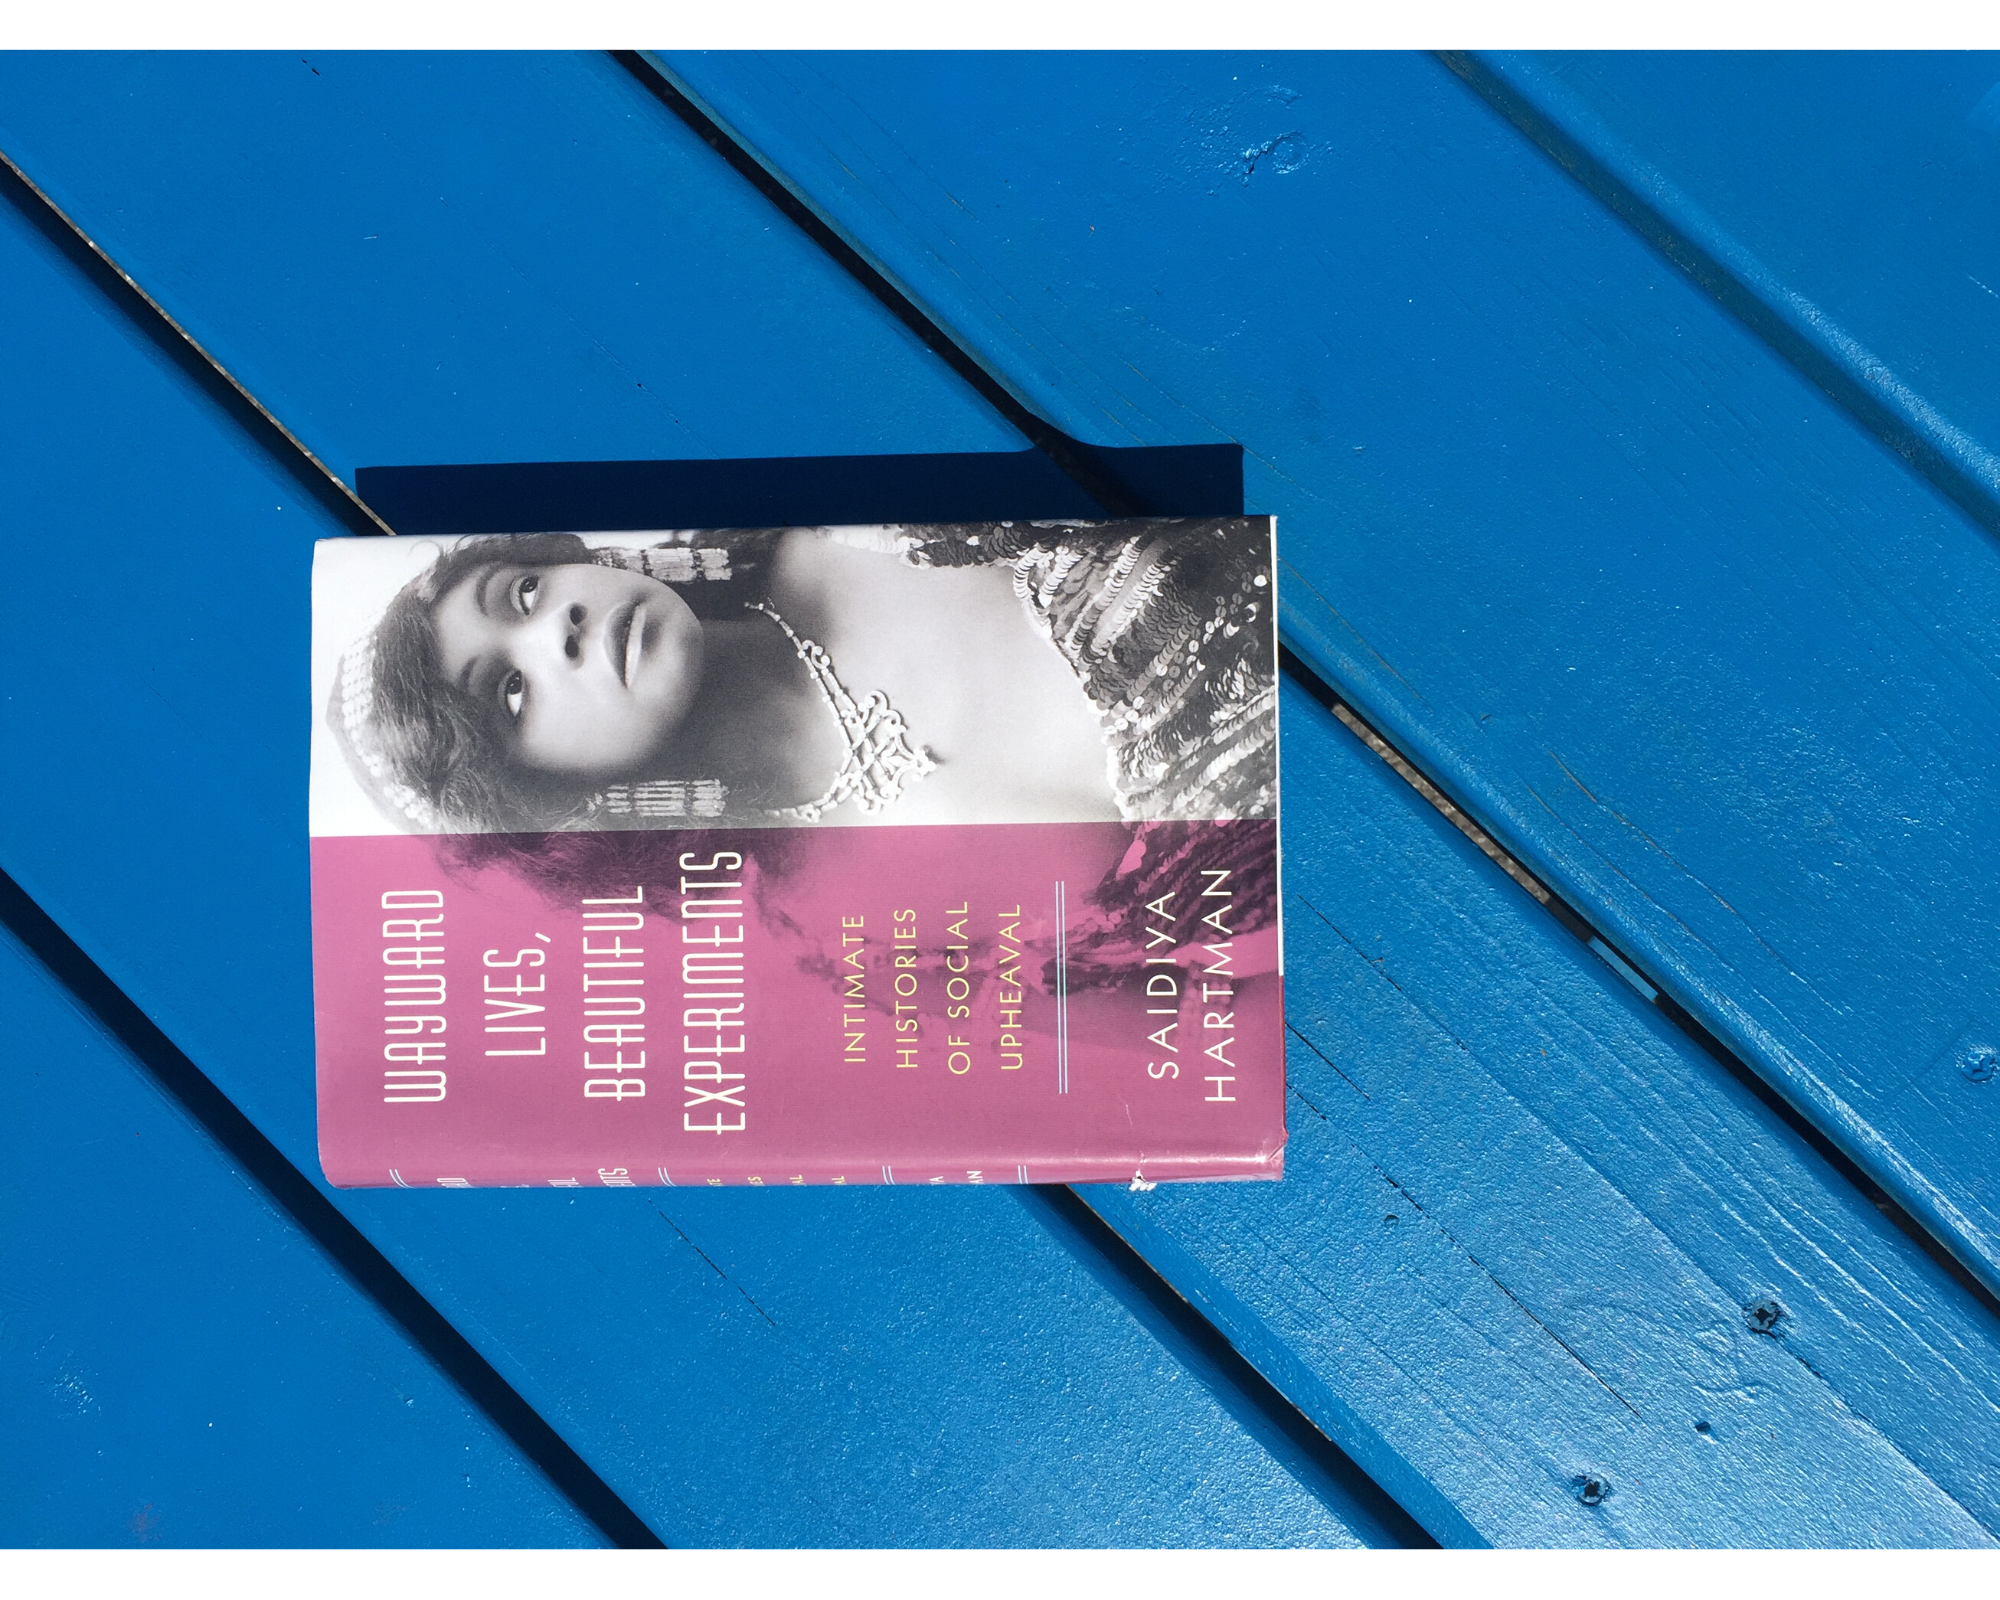 Saidiya Hartman's book "Wayward Lives, Beautiful Experiments: Intimate Histories of Social Upheaval" resting on a blue tabletop